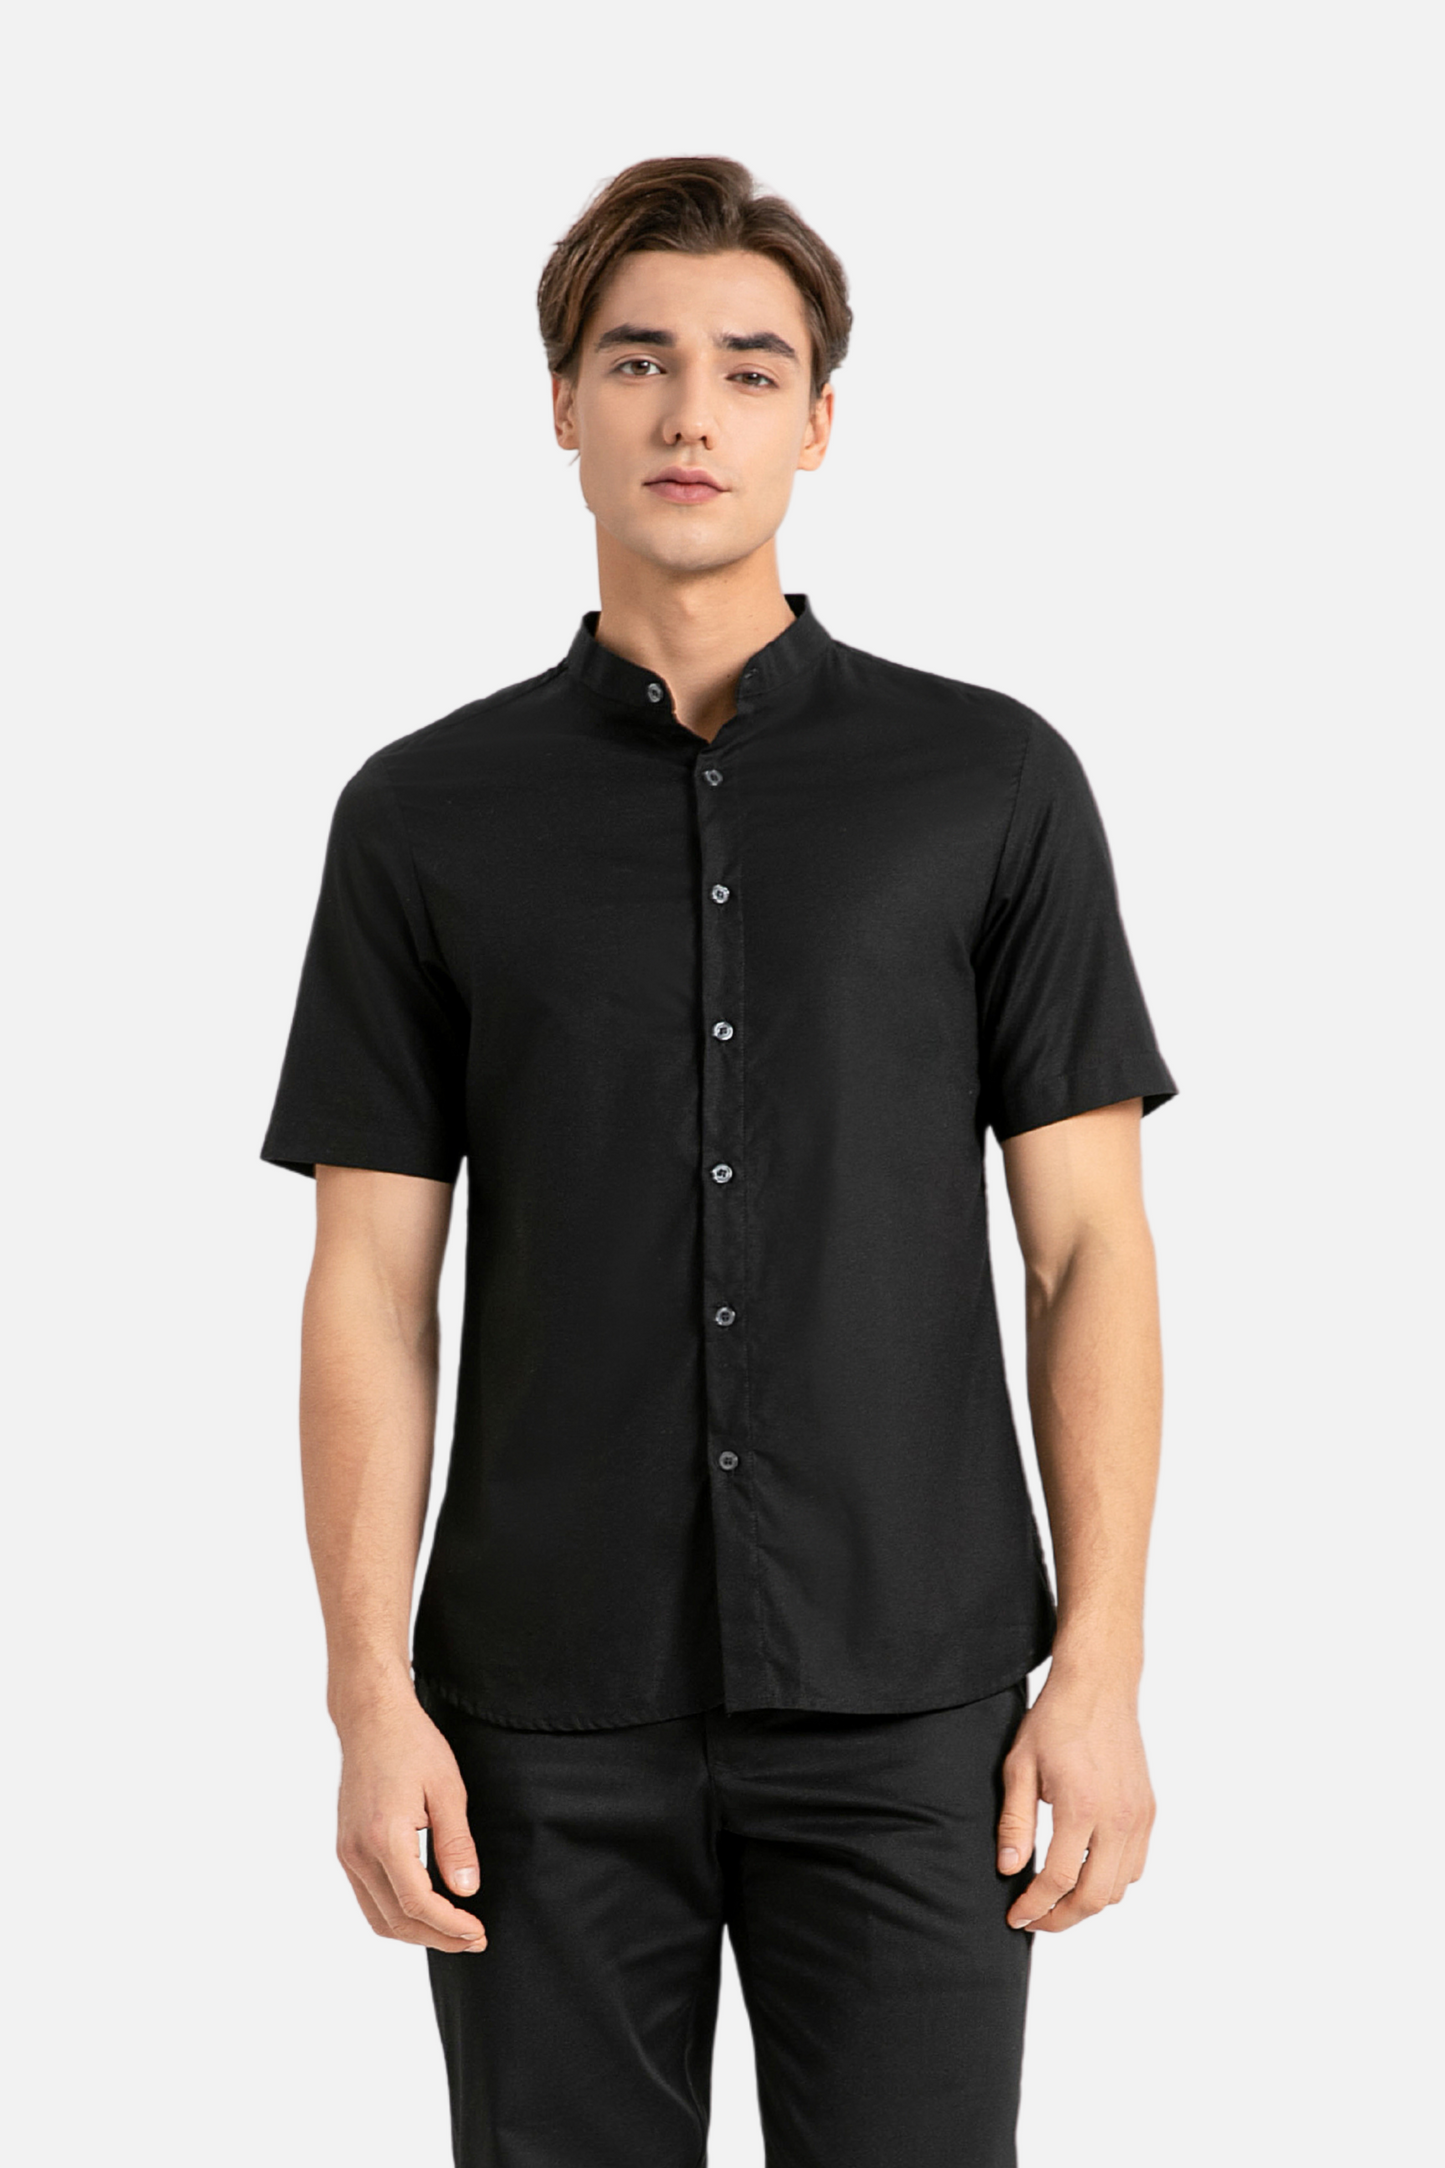 Brydan Black Shirt, Short Sleeve